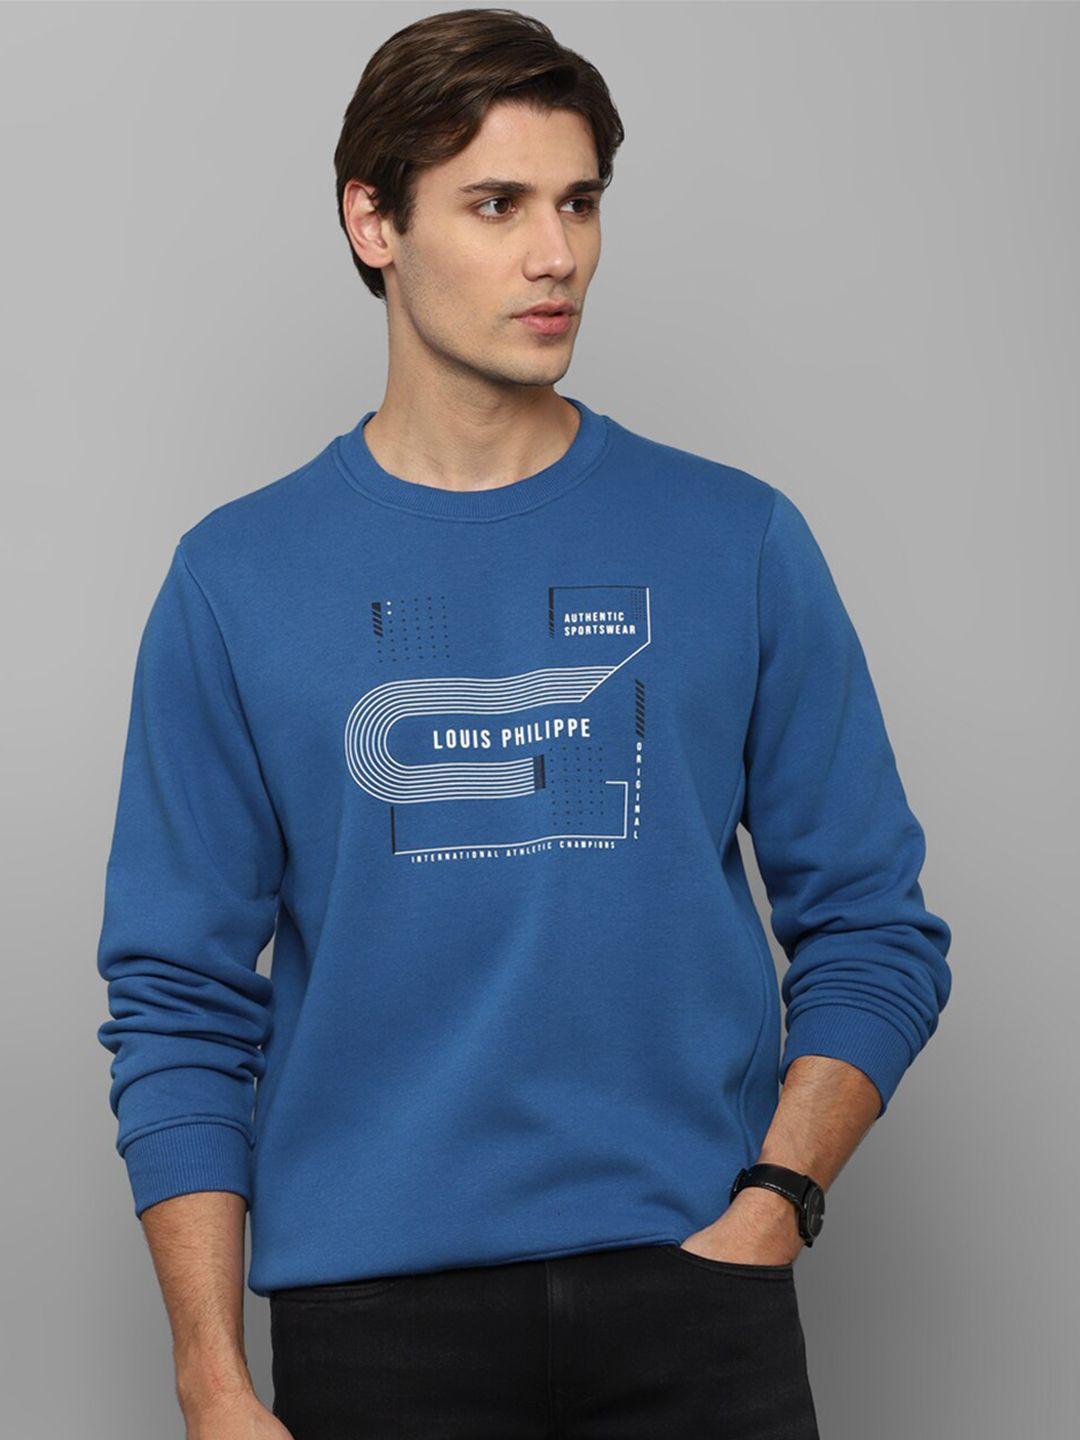 louis-philippe-sport-men-blue-cotton-printed-sweatshirt